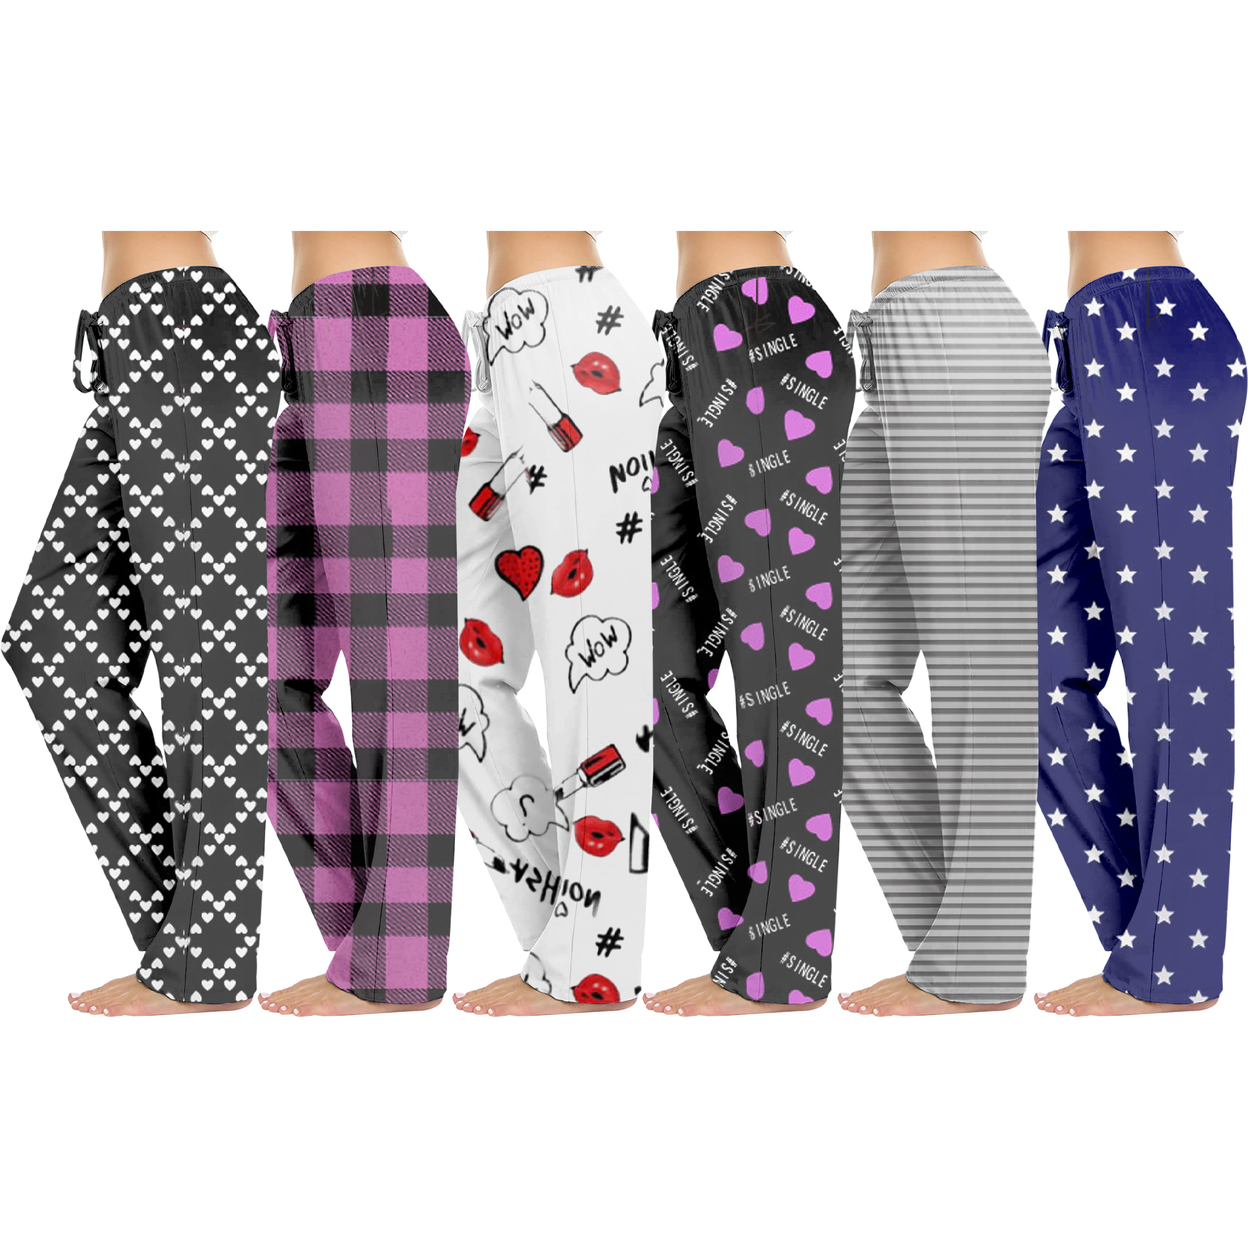 2-Pack: Women's Casual Fun Printed Lightweight Lounge Terry Knit Pajama Bottom Pants - Medium, Love